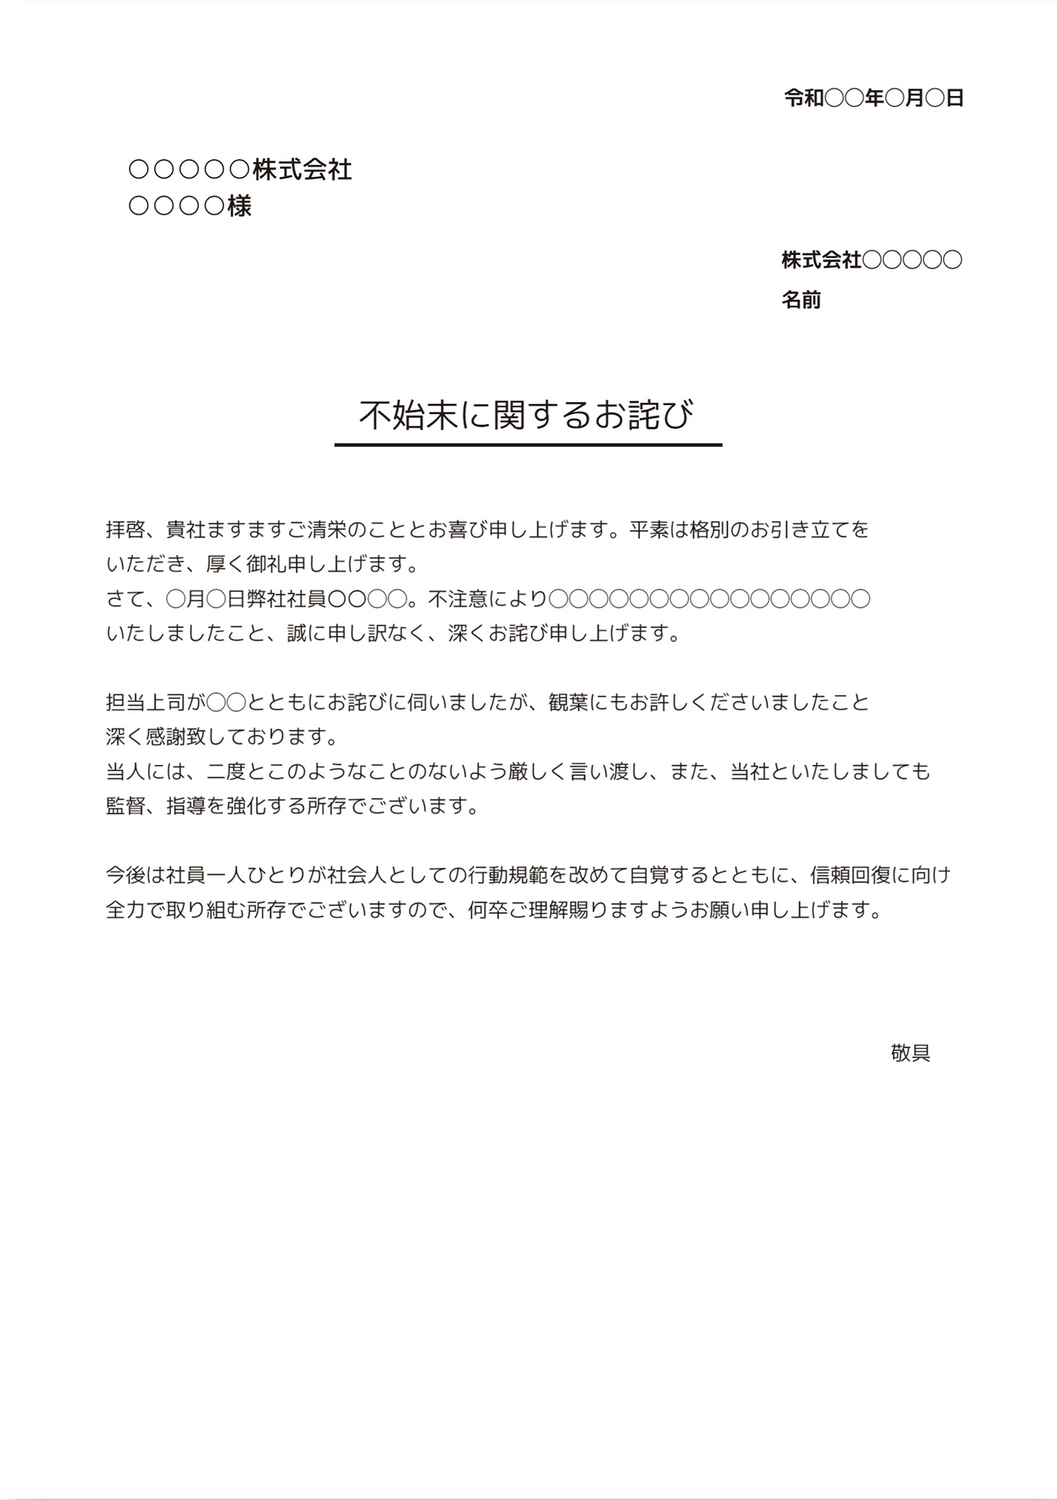 不始末に関するお詫び, bản mẫu, Tài liệu A4, tạo ra, Tài liệu A4 mẫu